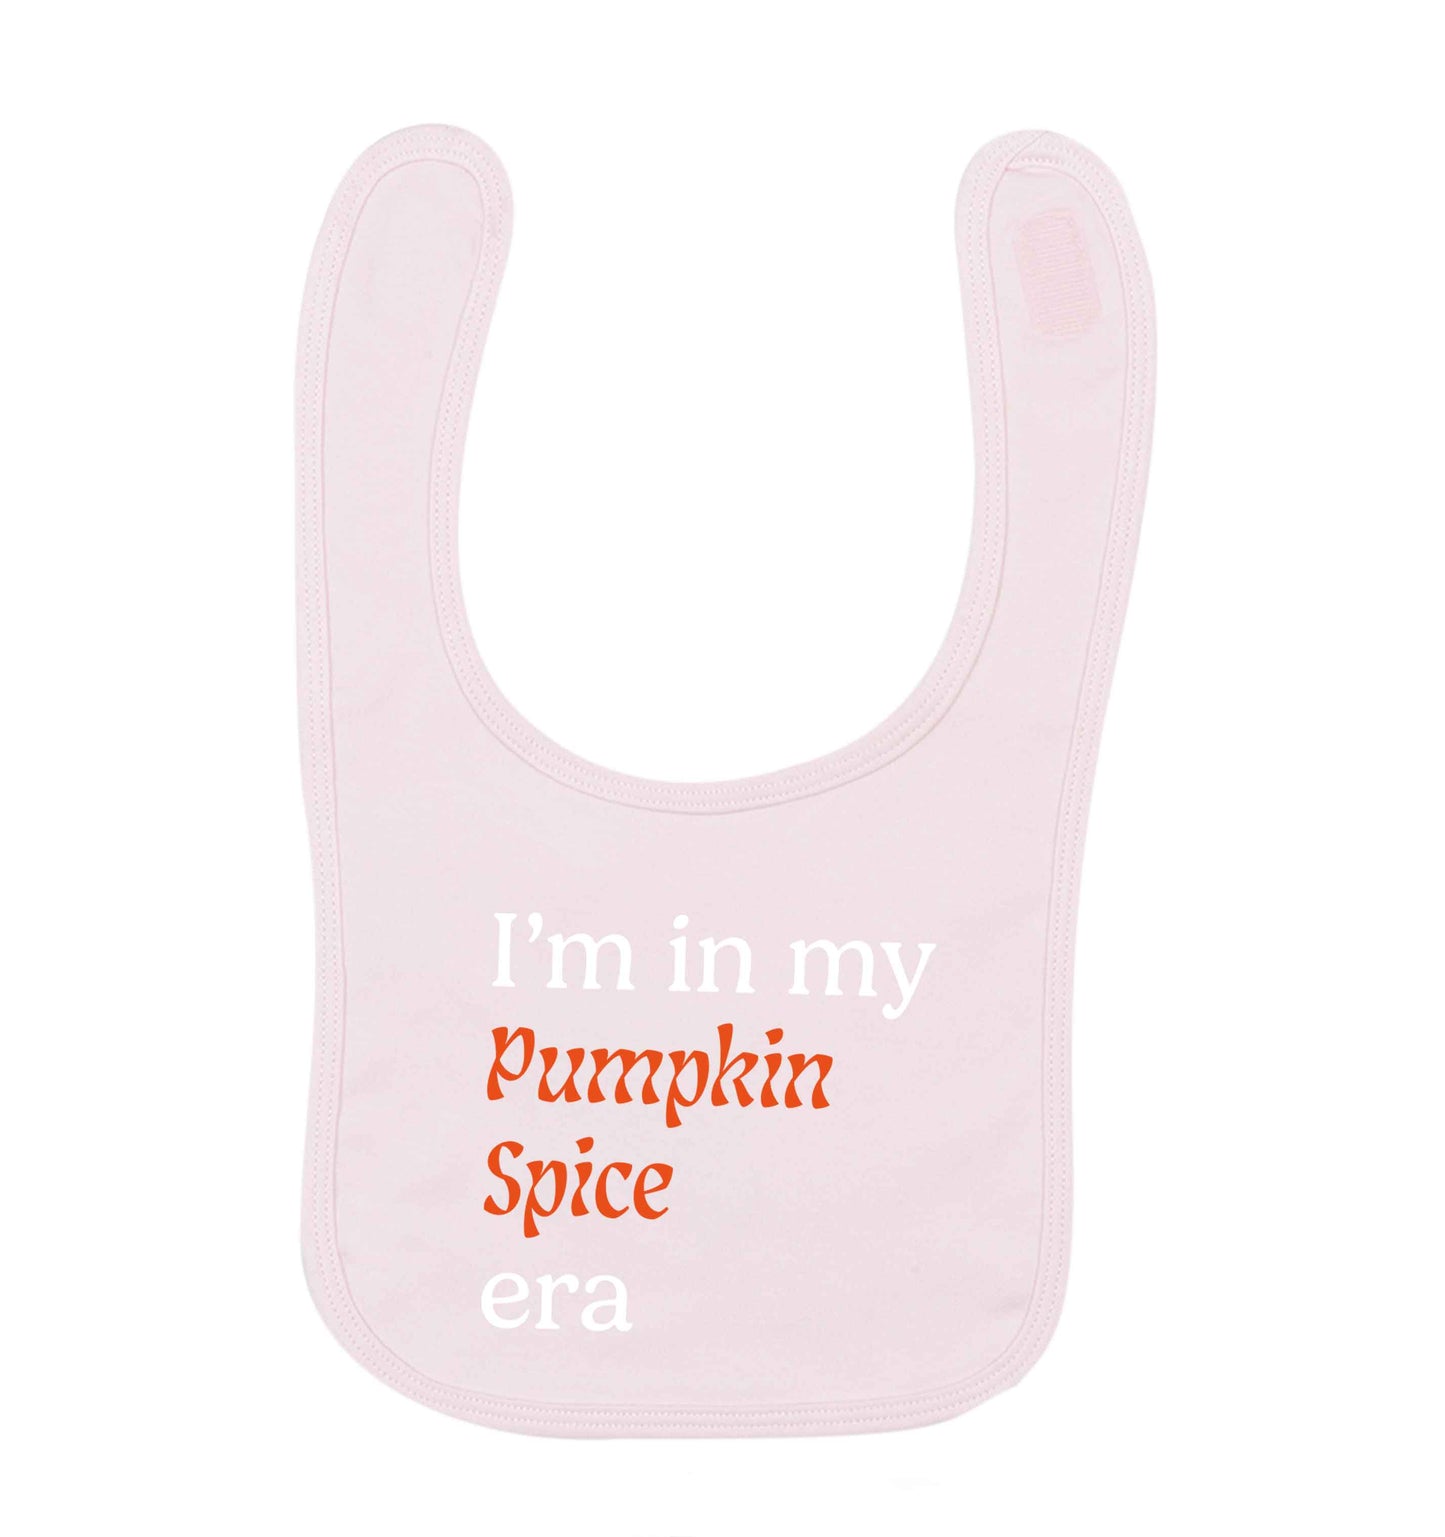 I'm in my pumpkin spice era Kit pale pink baby bib